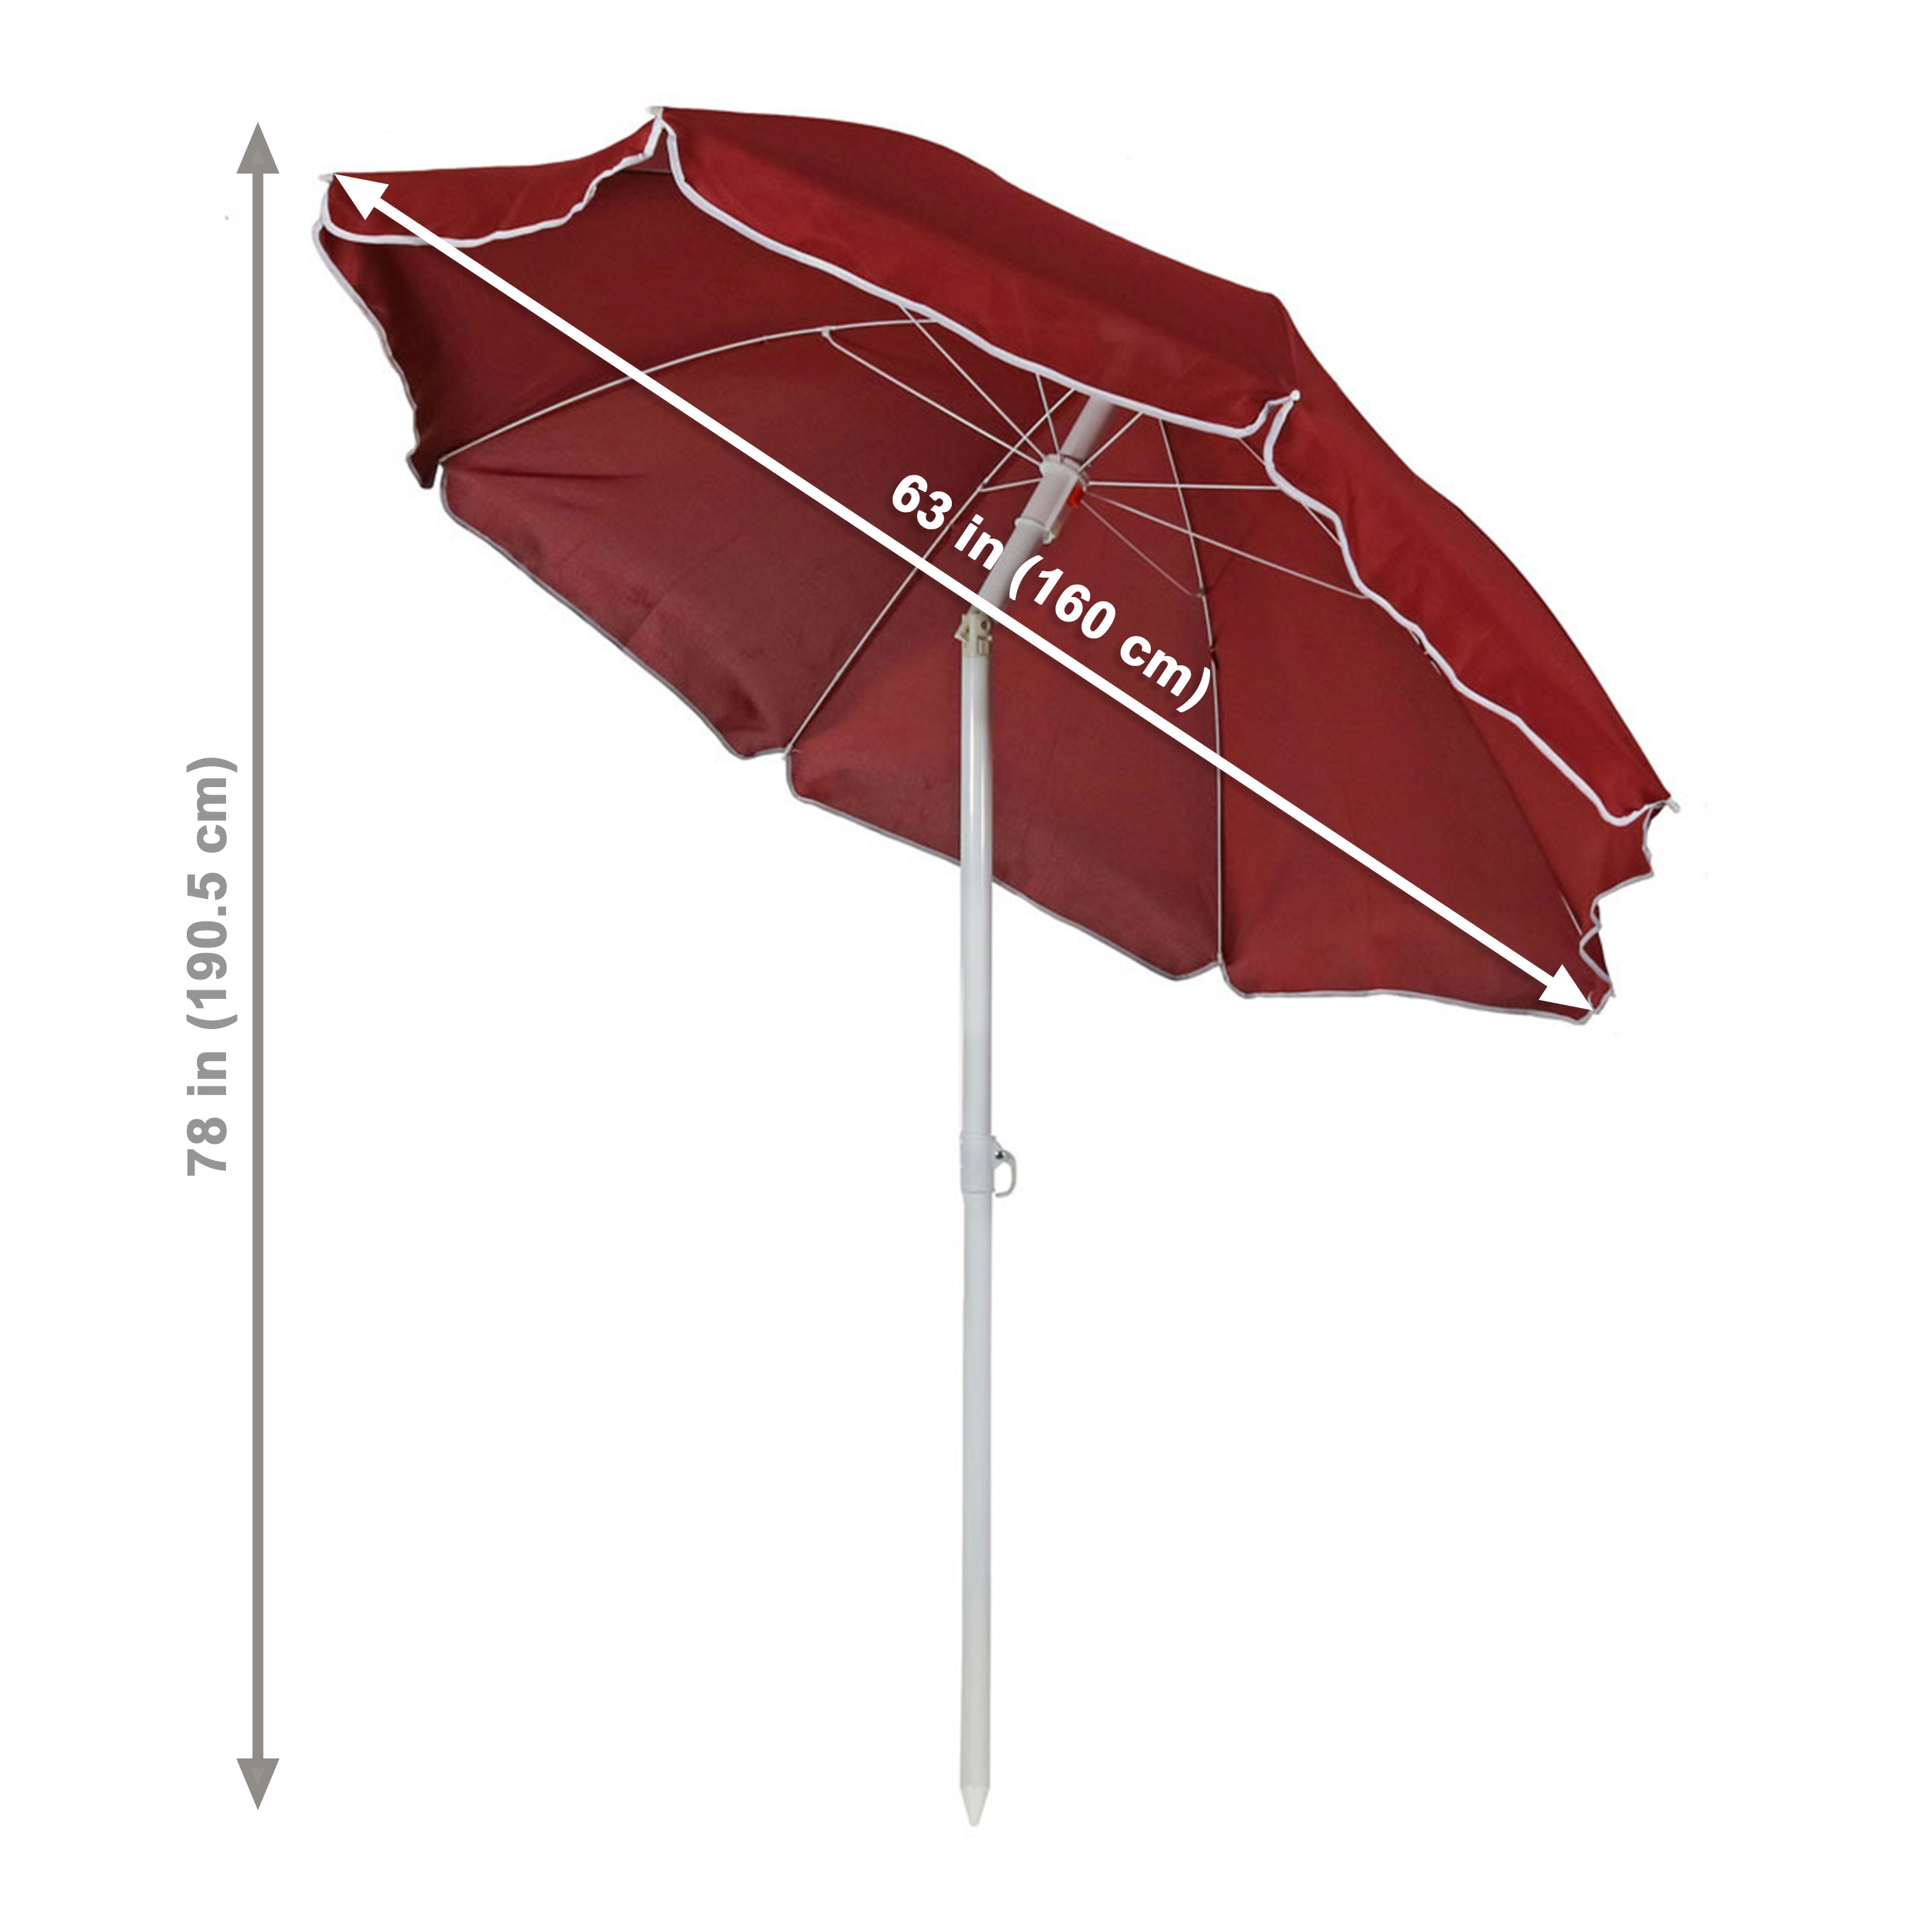 Sunnydaze Decor 5-Foot Beach Umbrella with Tilt Function - Red